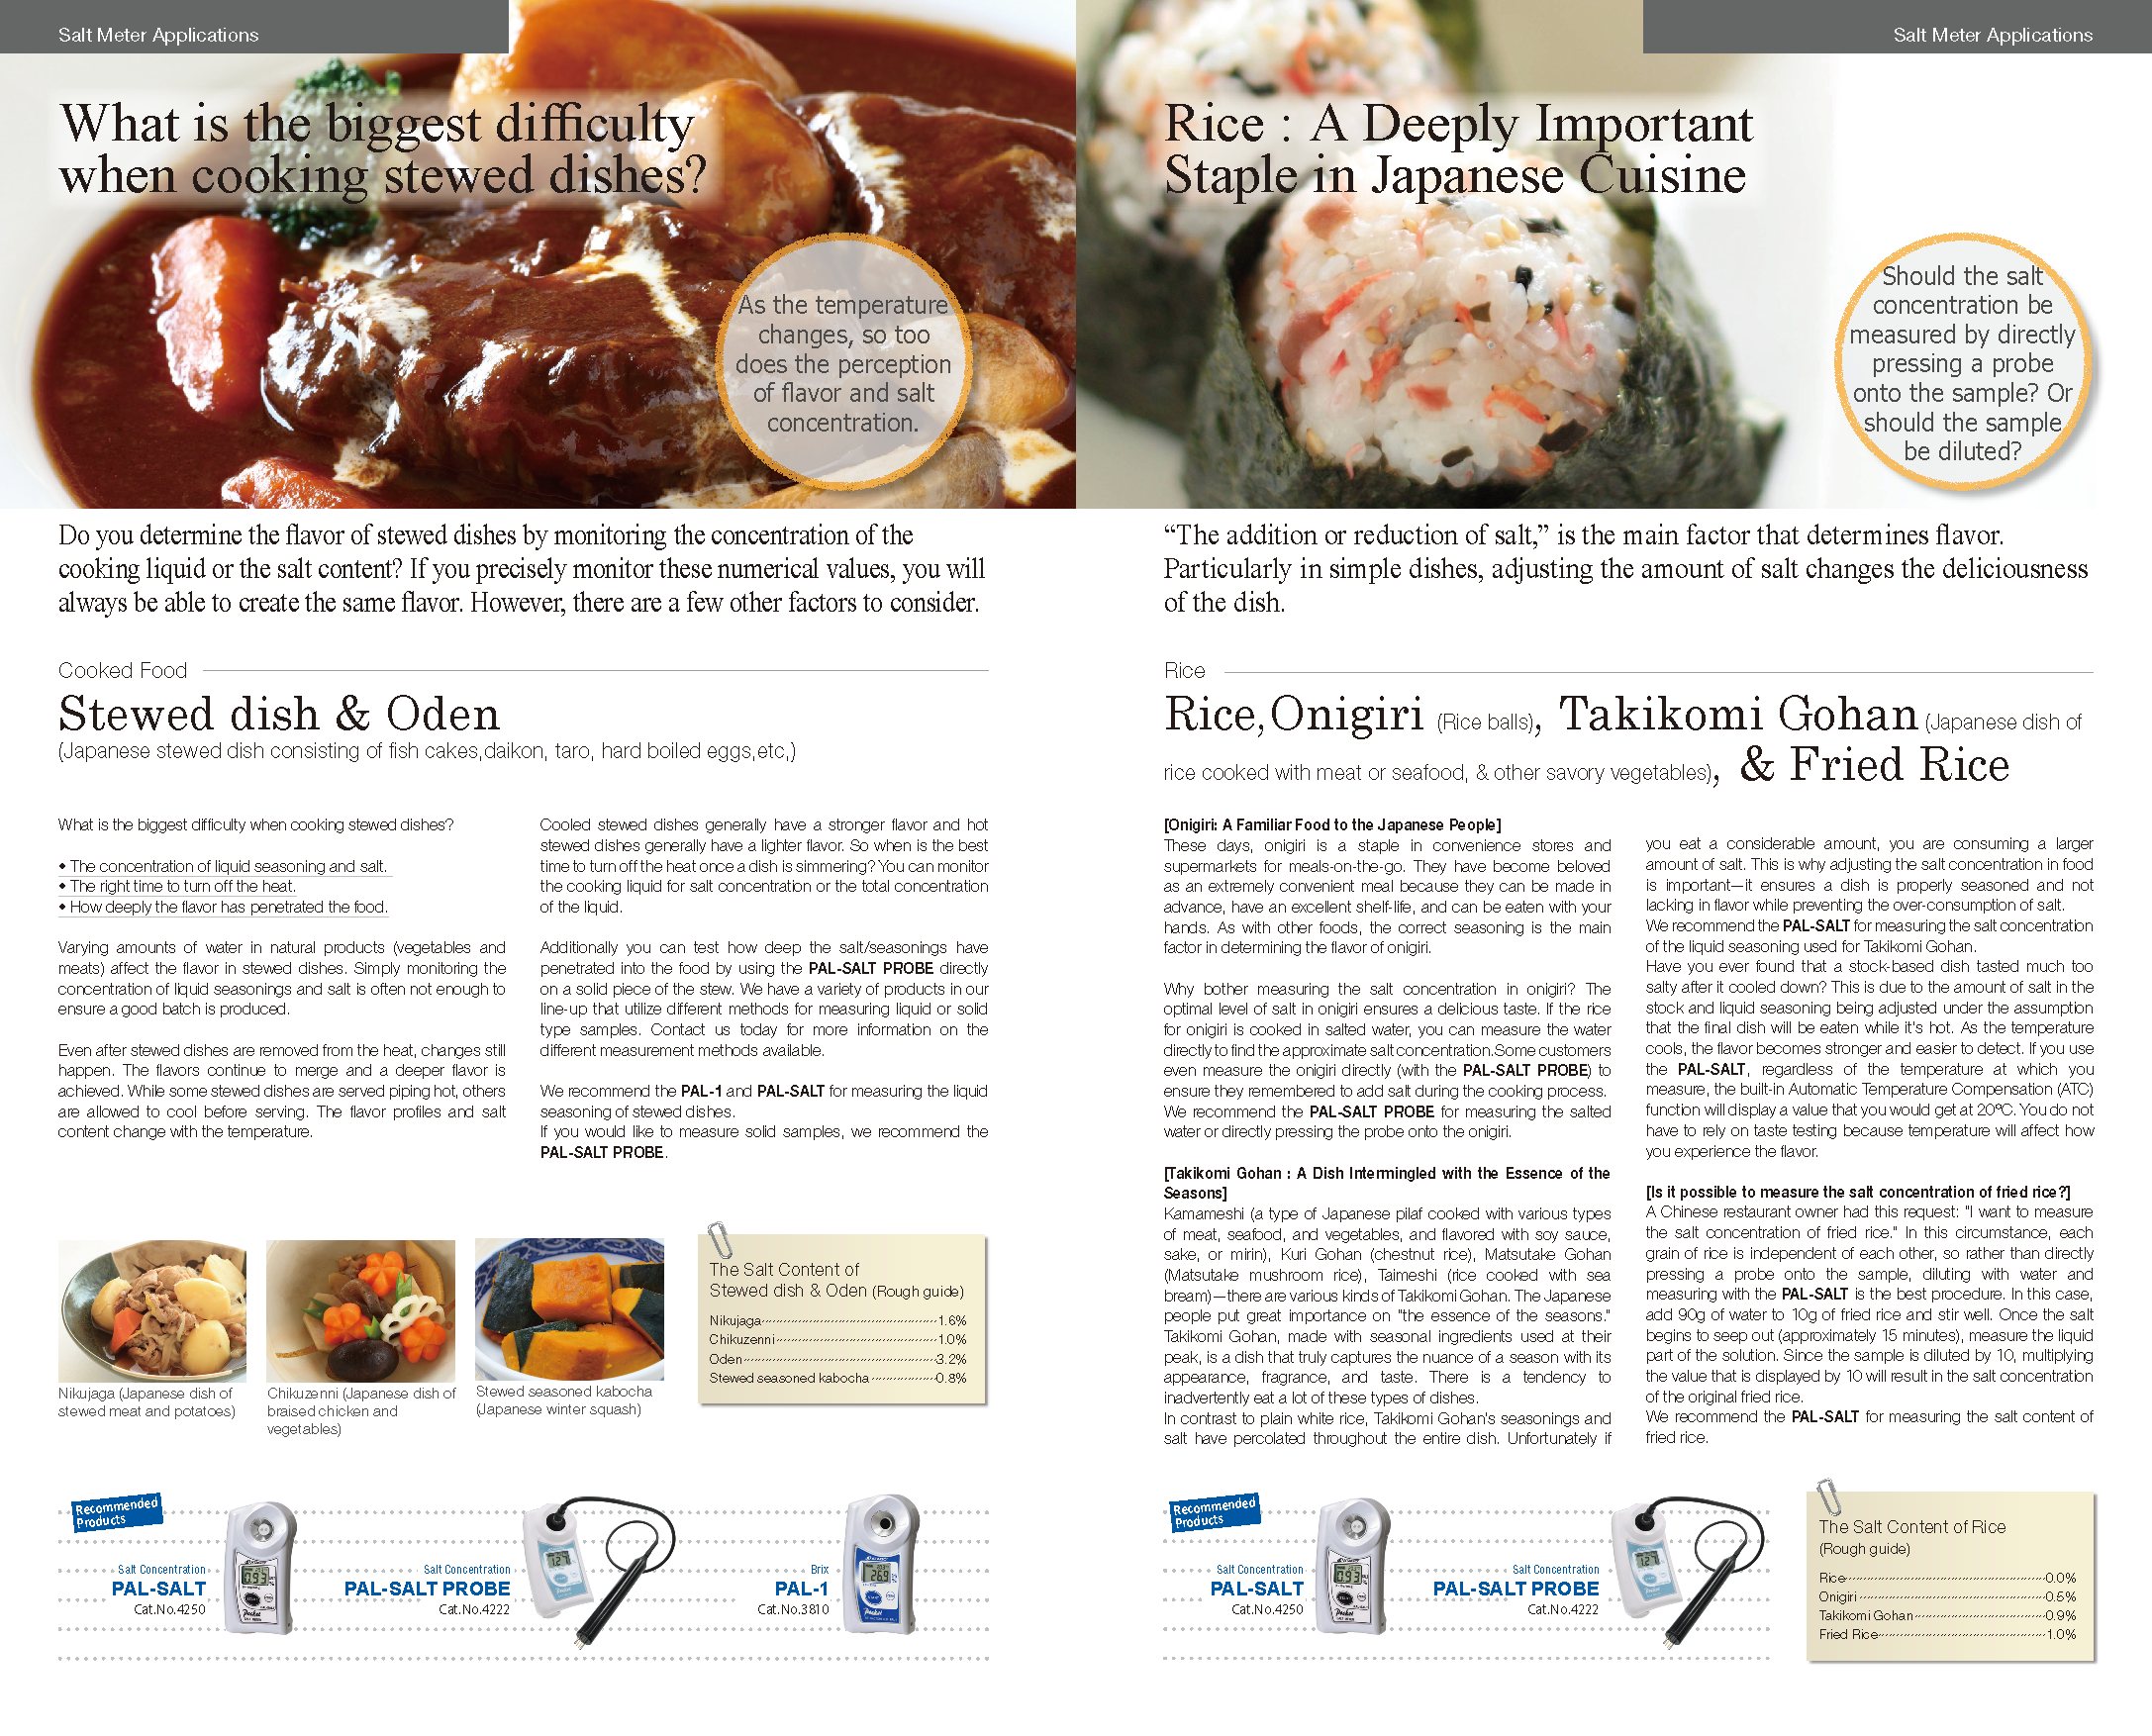 Stewed dish & Oden / Rice,Onigiri (Rice balls), Takikomi Gohan, & Fried Rice